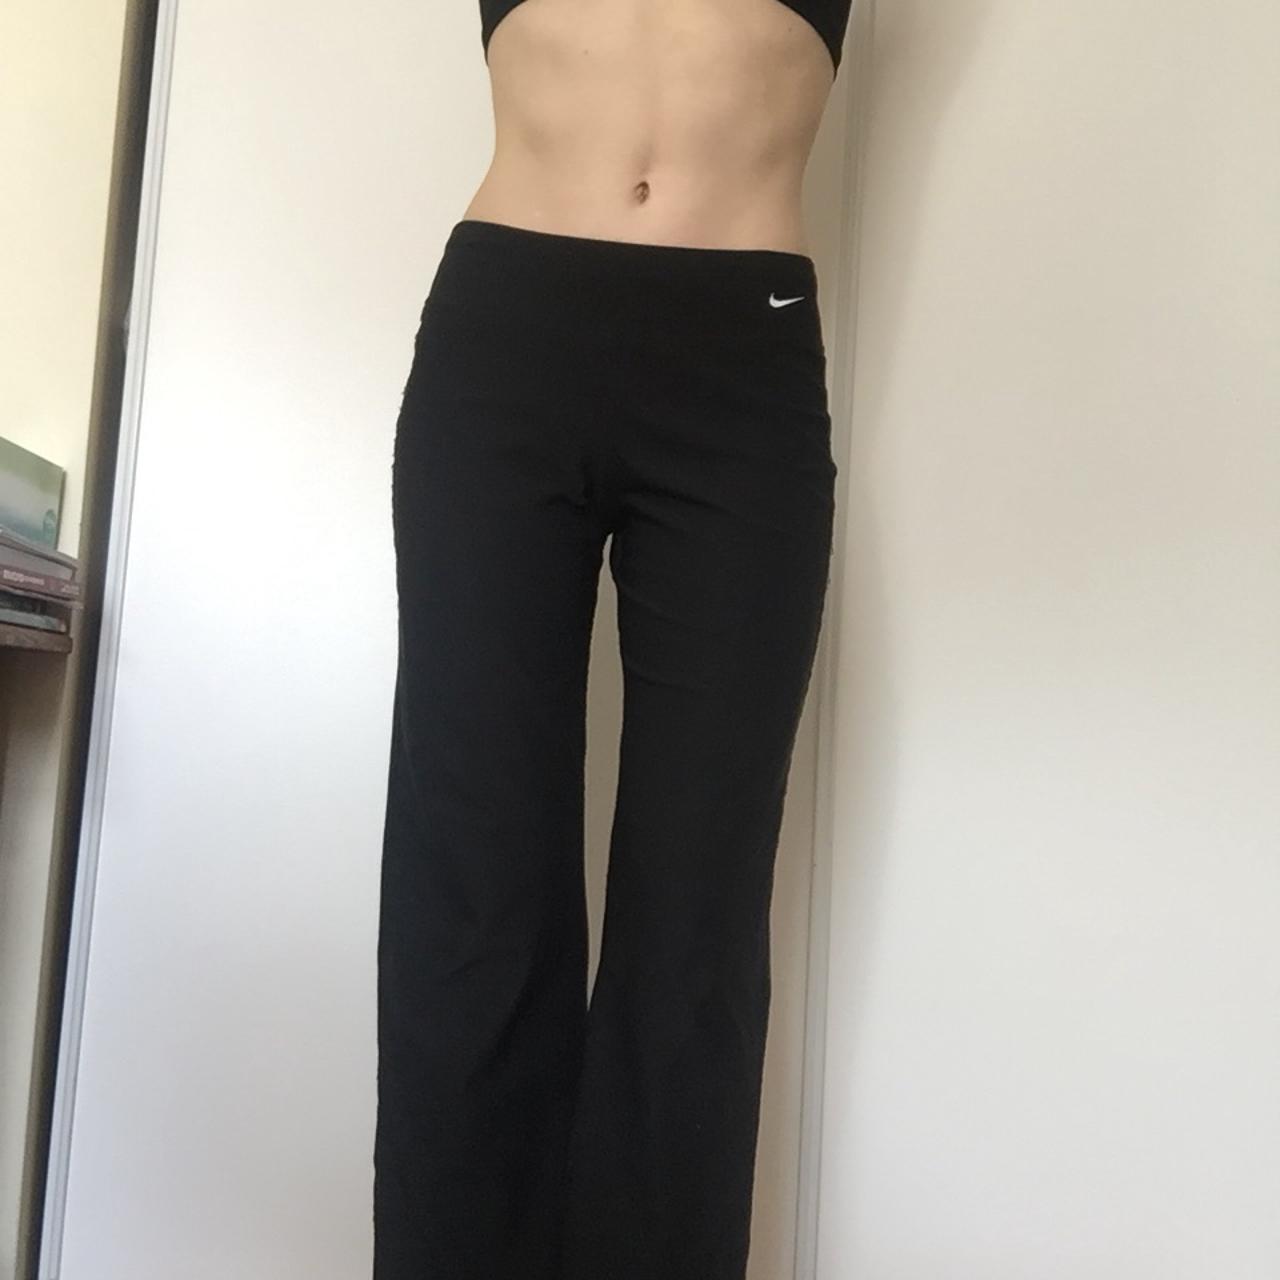 Black Athleta Yoga Pants - Flare Cut. The best yoga - Depop